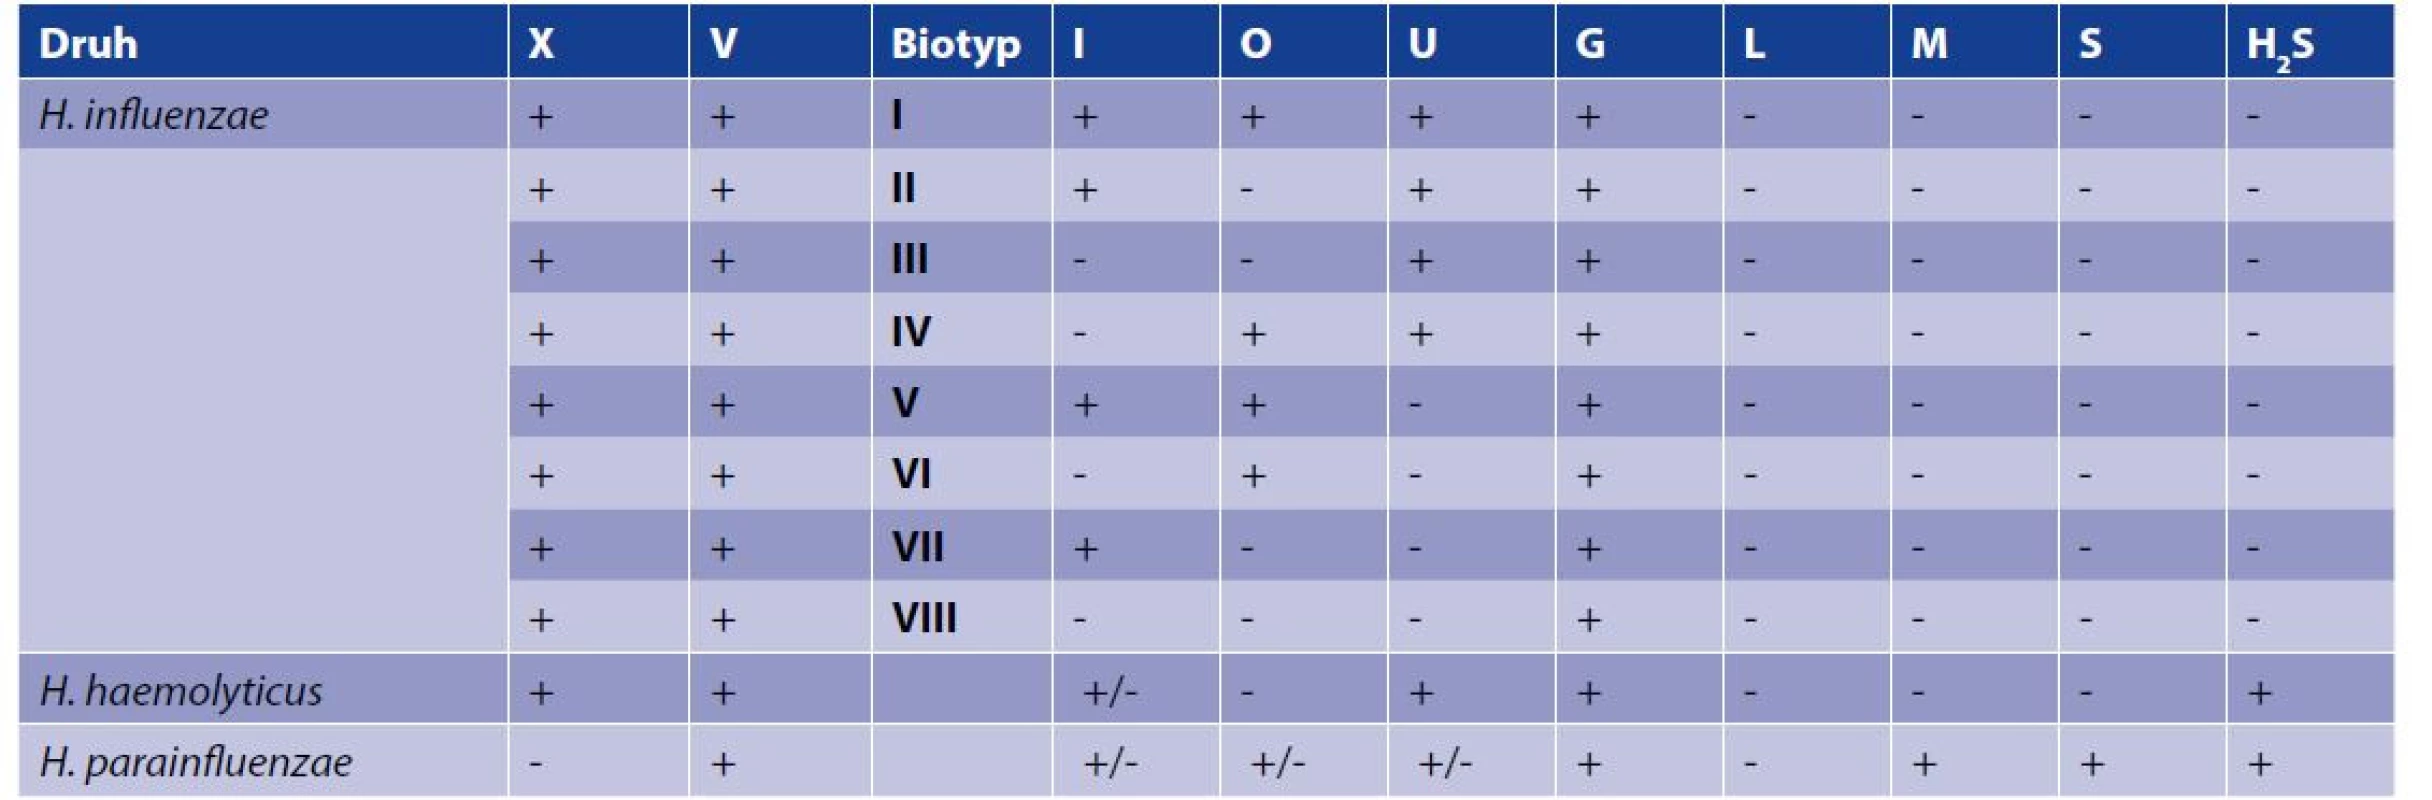 Biotypy H. influenzae a fenotypové vlastnosti vybraných blízkých druhů<br>
Table 1. H. influenzae biotypes and phenotypic characteristics of selected closely related species